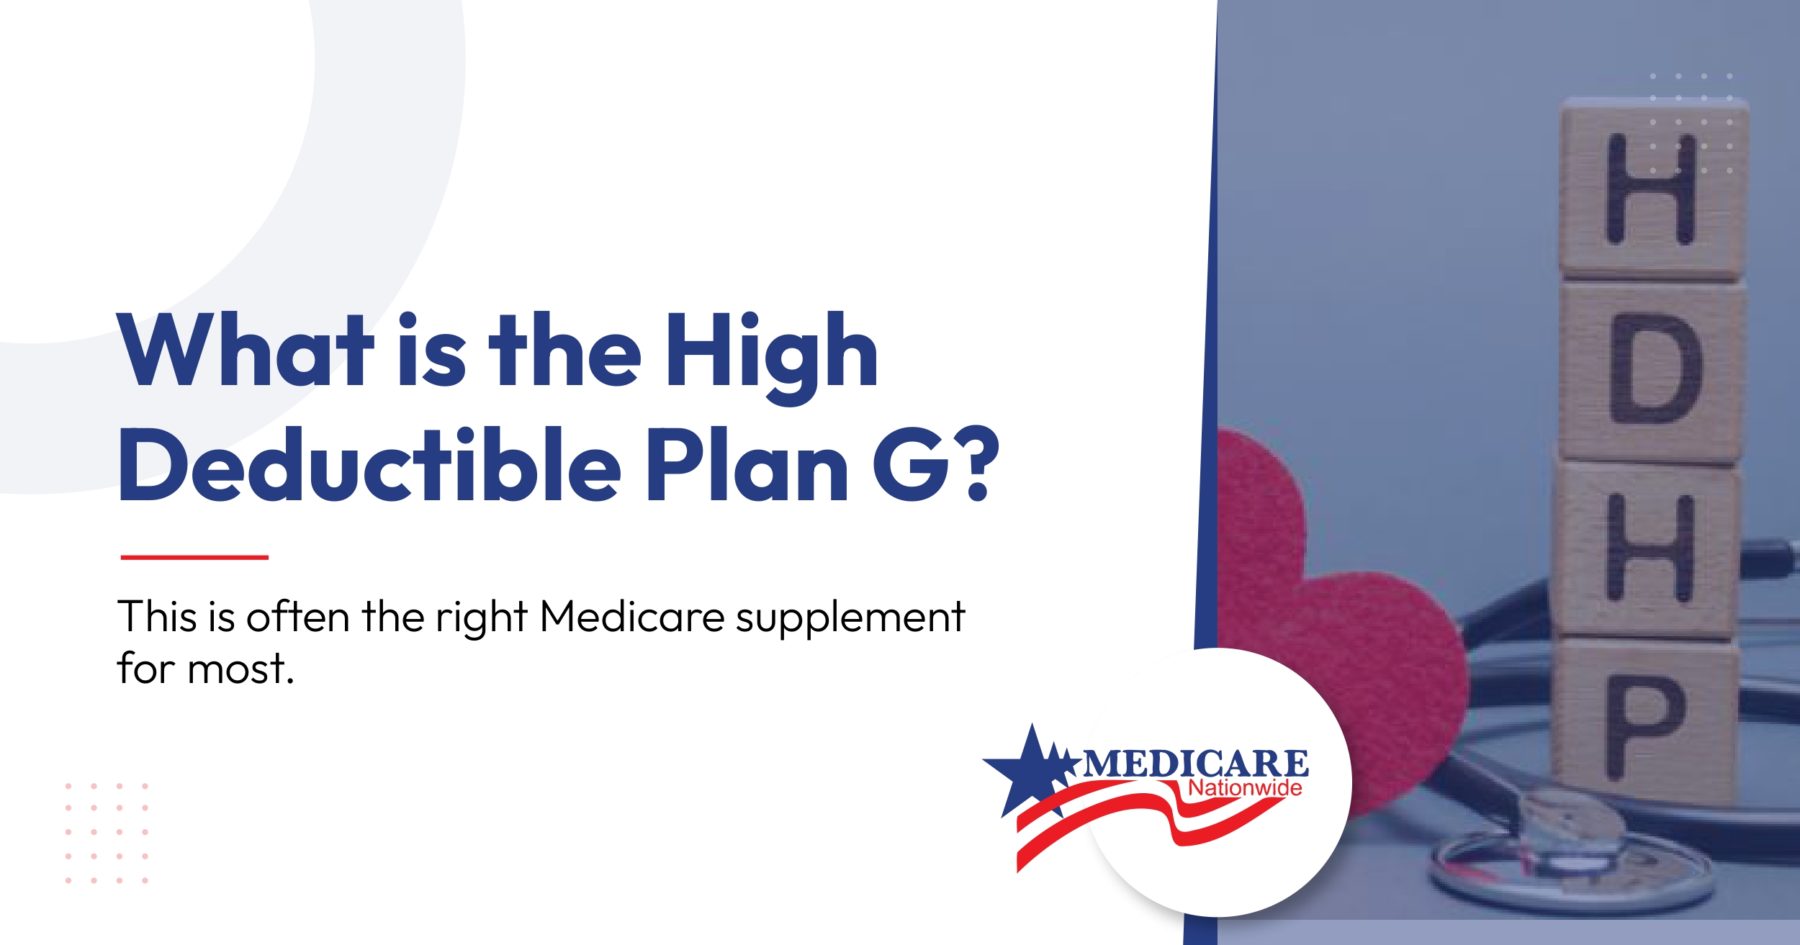 High Deductible Plan G Medicare Review Reviews & Ratings